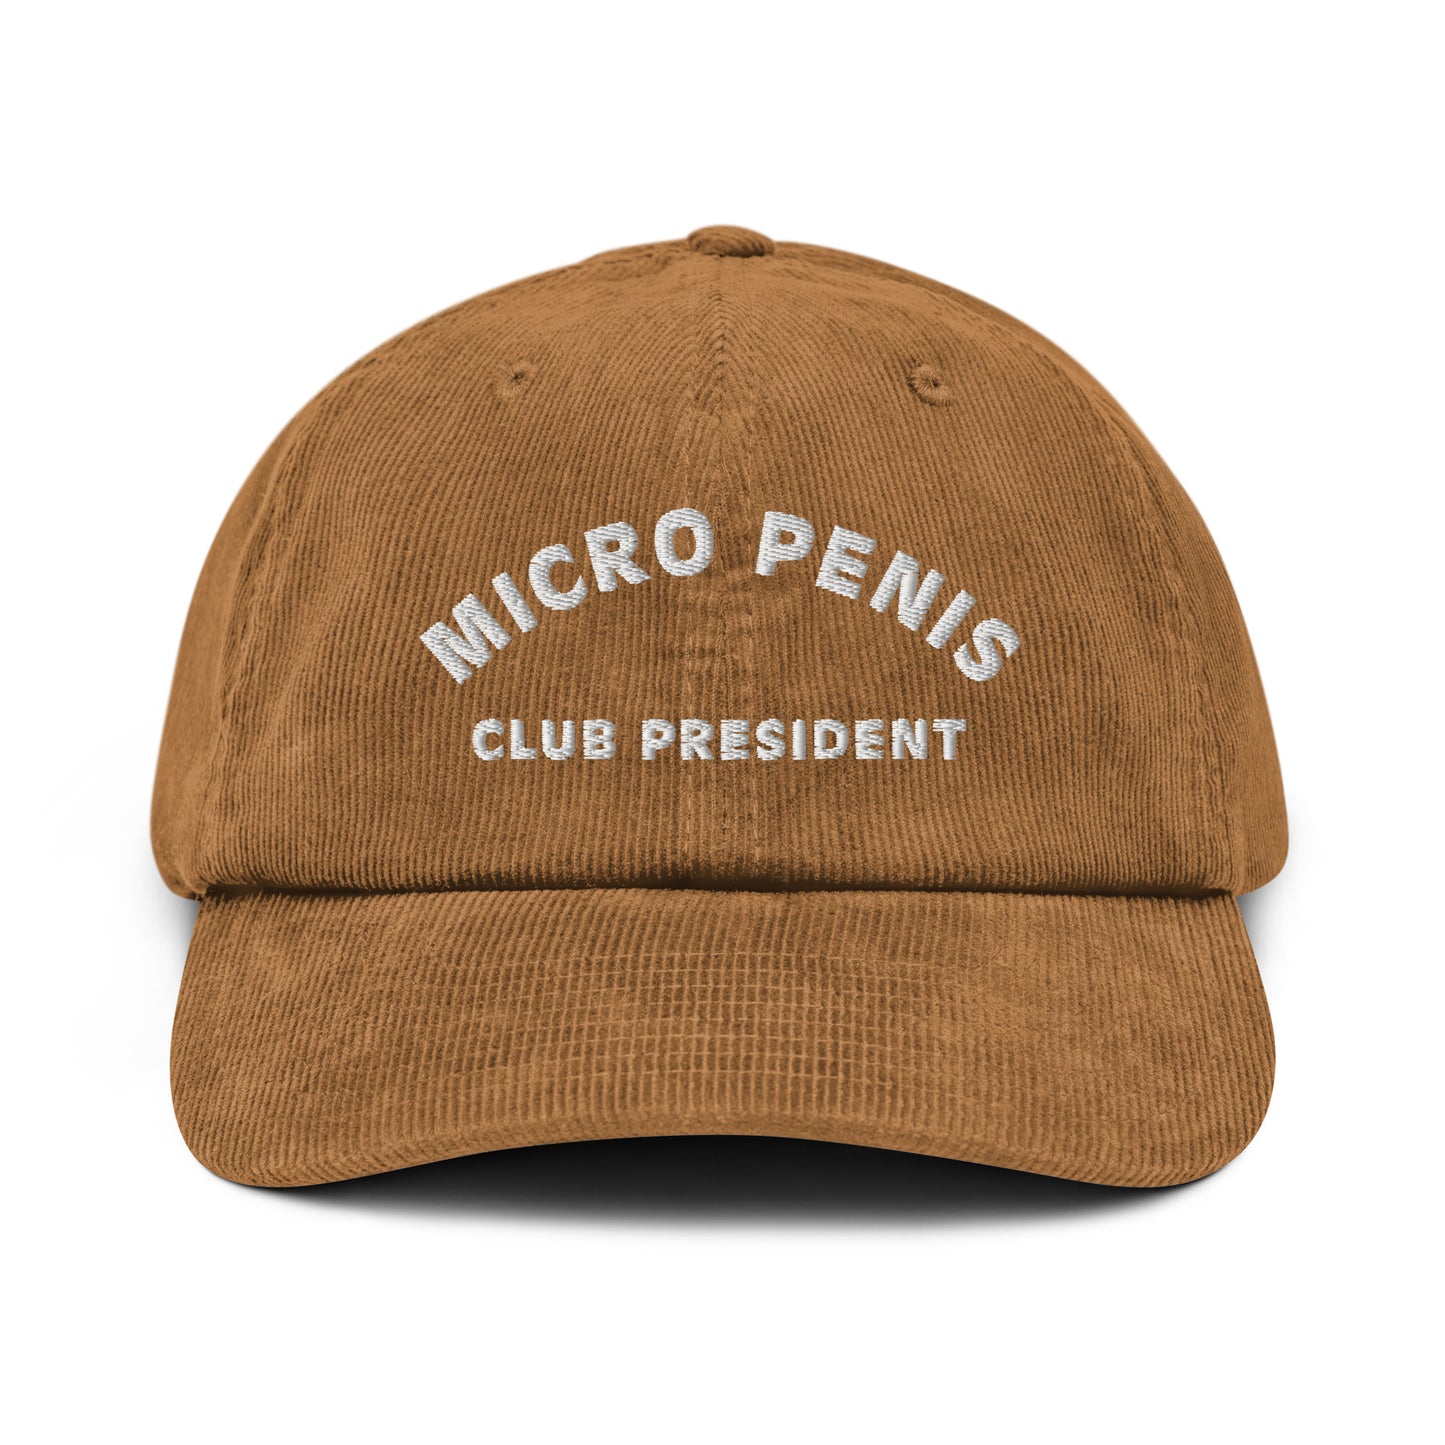 MICRO PENIS CLUB PRESIDENT Cord-Cap